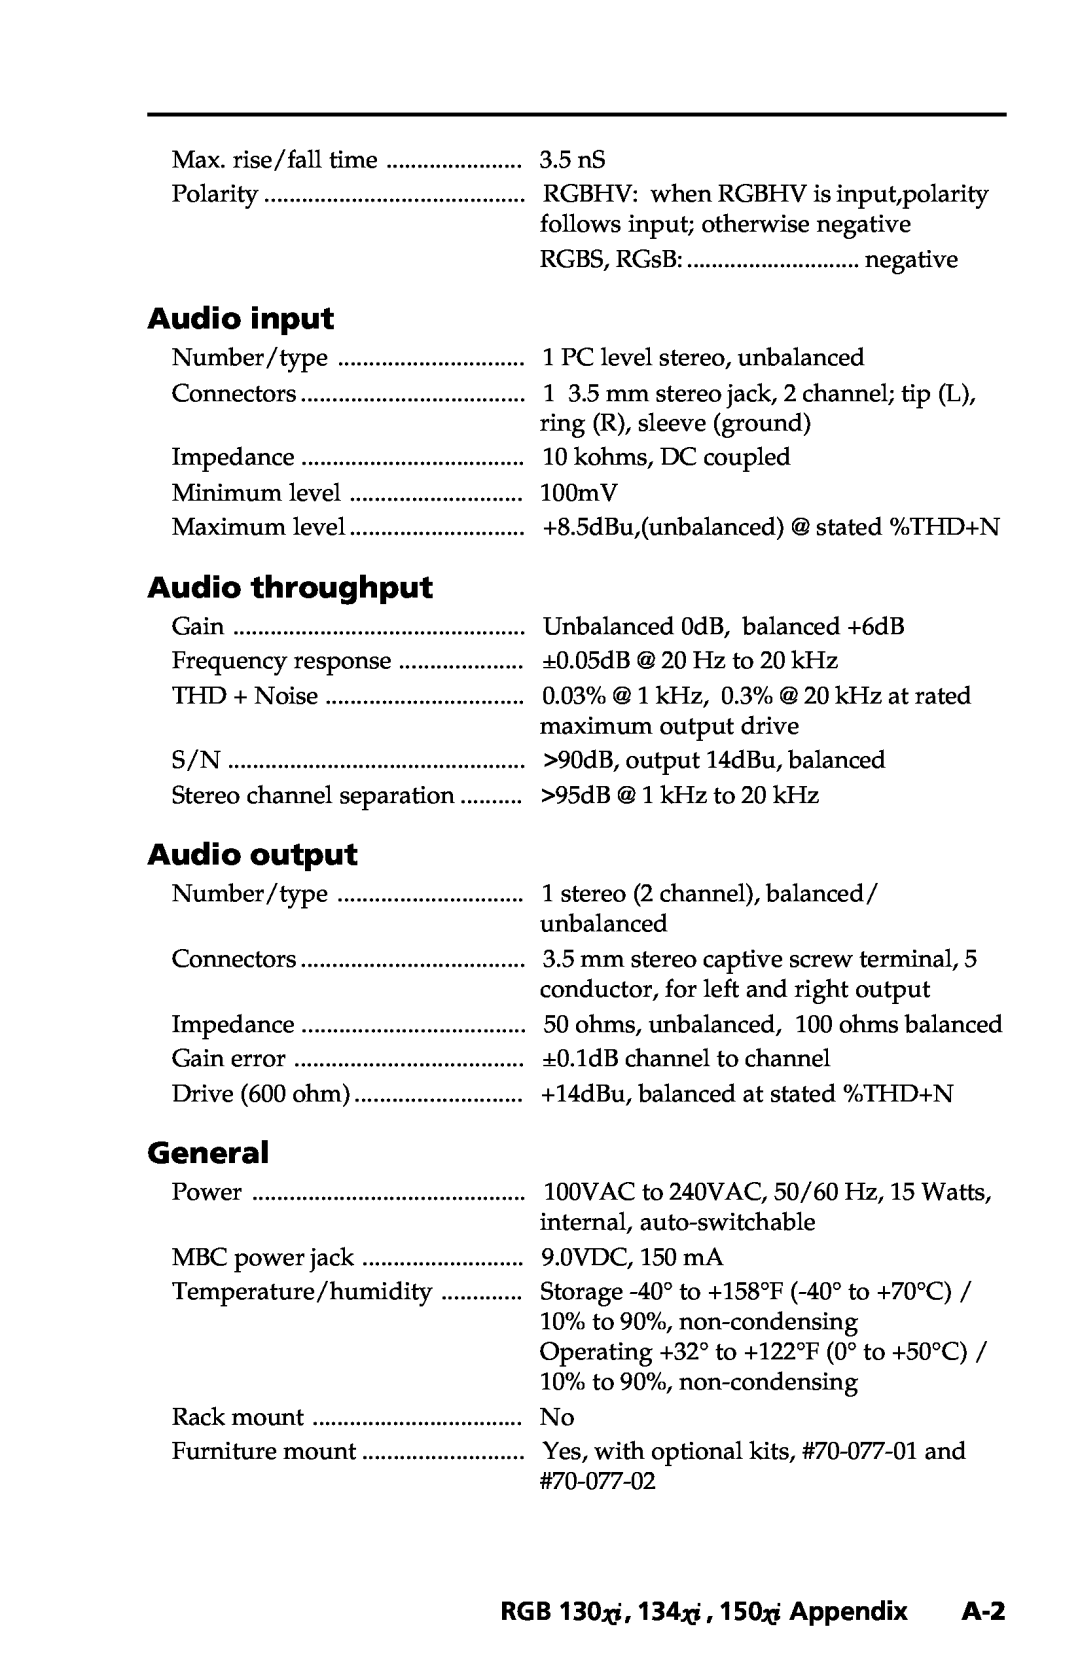 Extron electronic user manual Audio input, Audio throughput, Audio output, General, RGB 130xi , 134xi , 150xi Appendix 